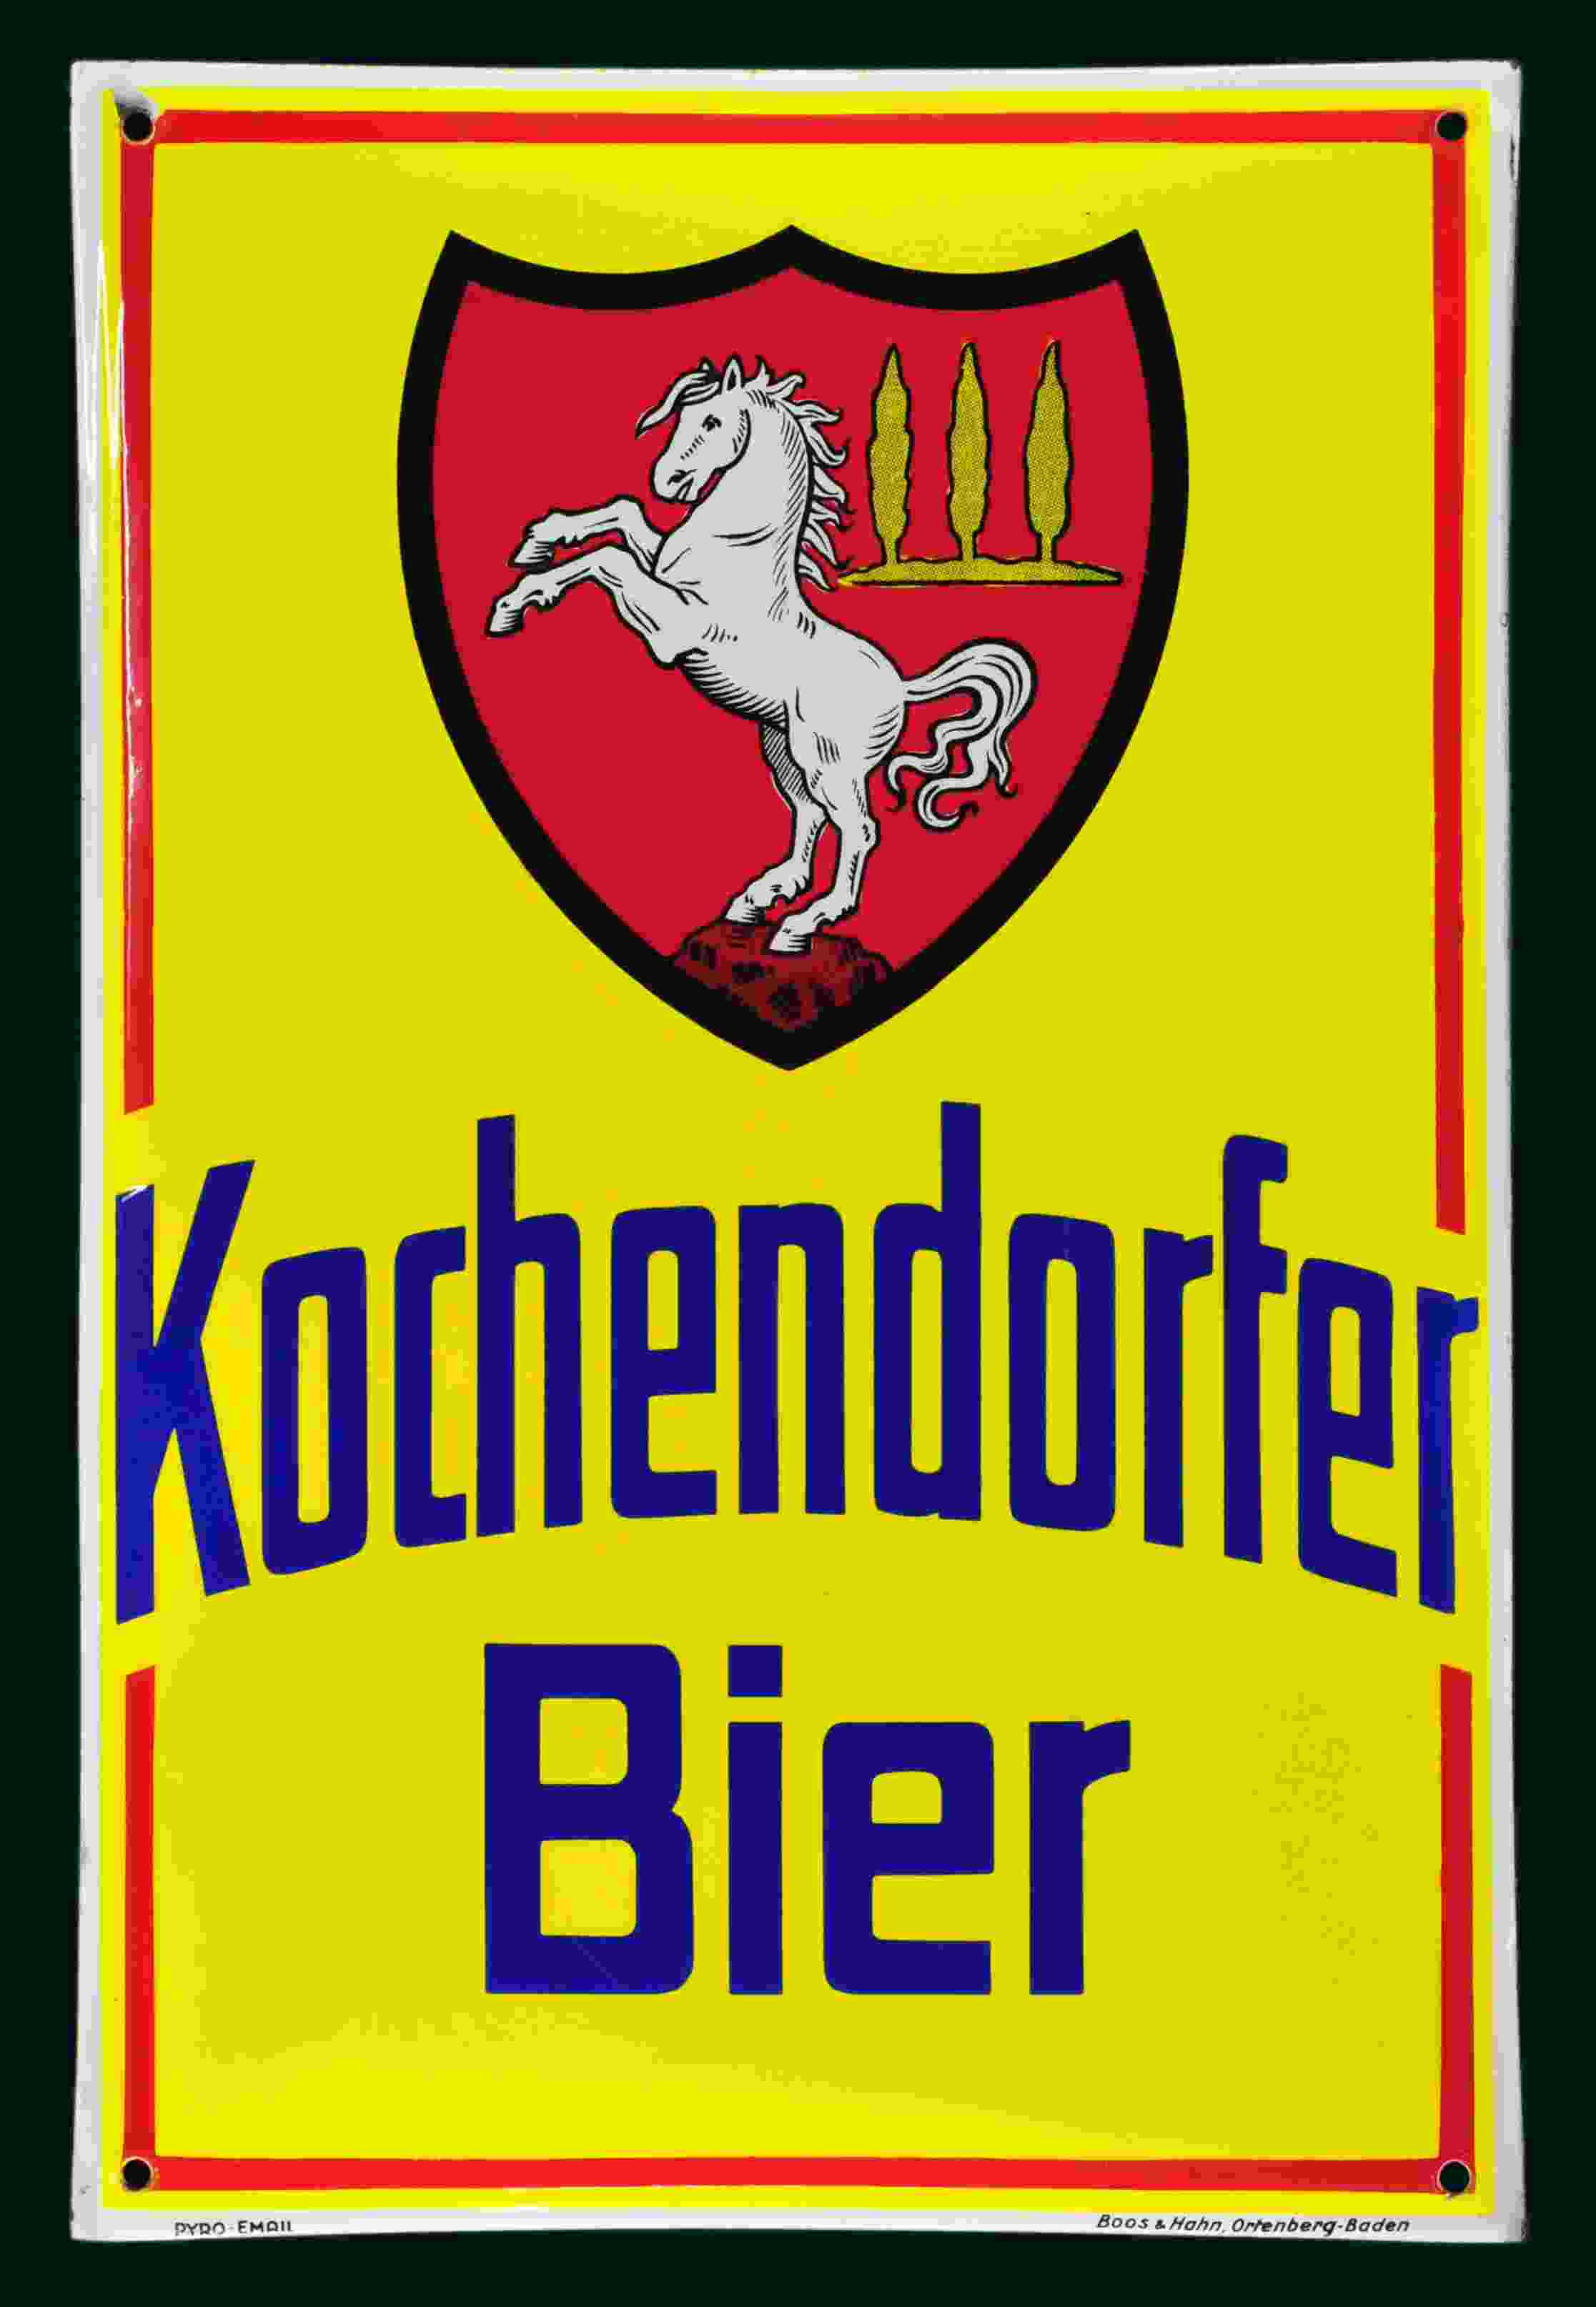 Kochendorfer Bier 